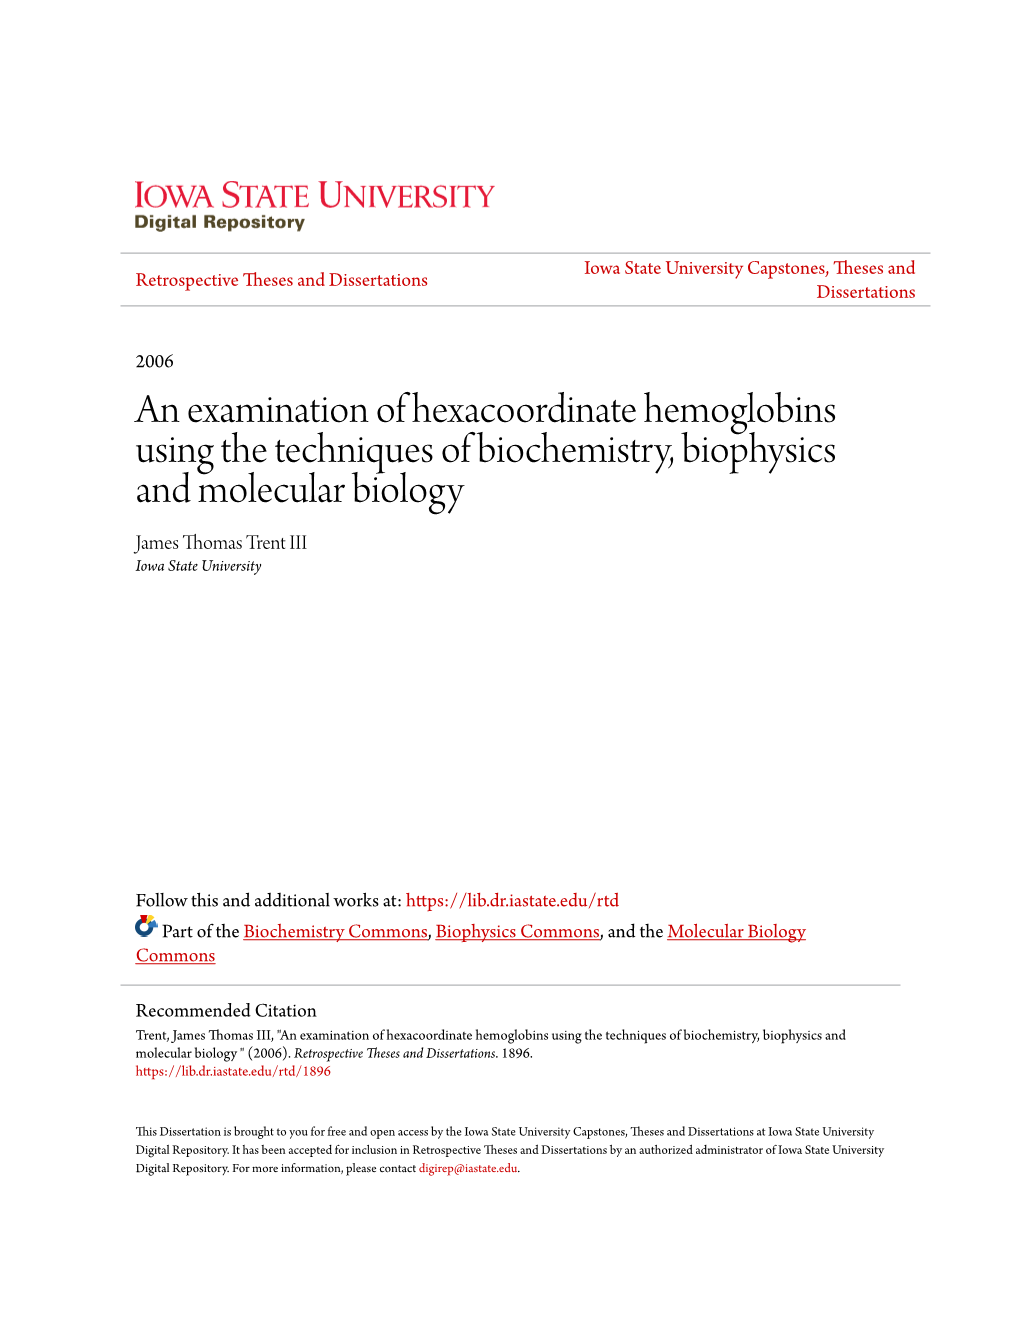 An Examination of Hexacoordinate Hemoglobins Using the Techniques of Biochemistry, Biophysics and Molecular Biology James Thomas Trent III Iowa State University